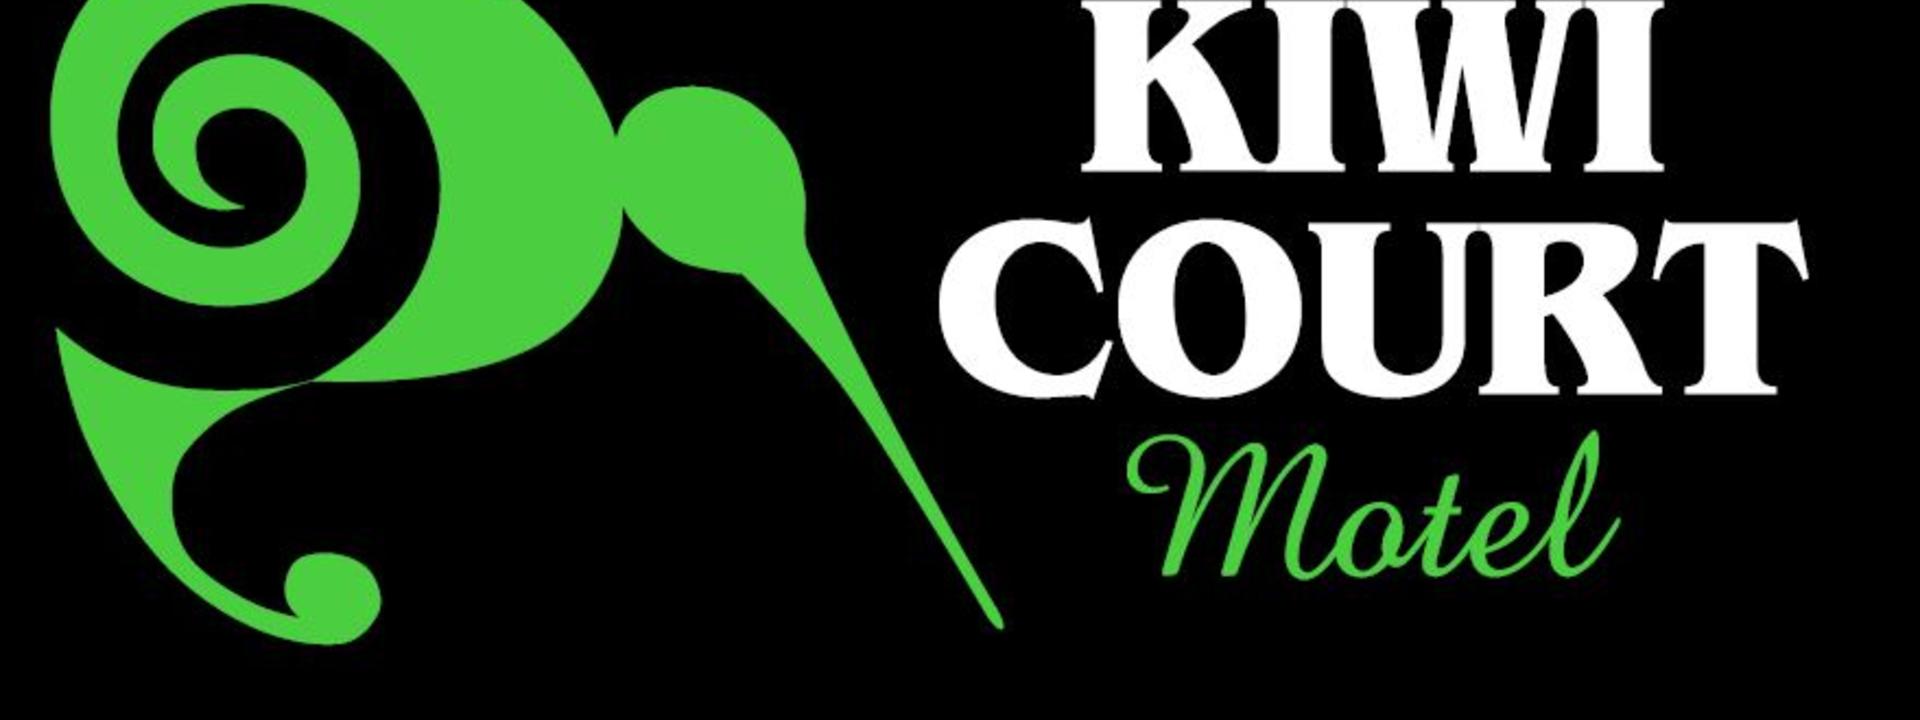 kiwi-court-logo.jpg